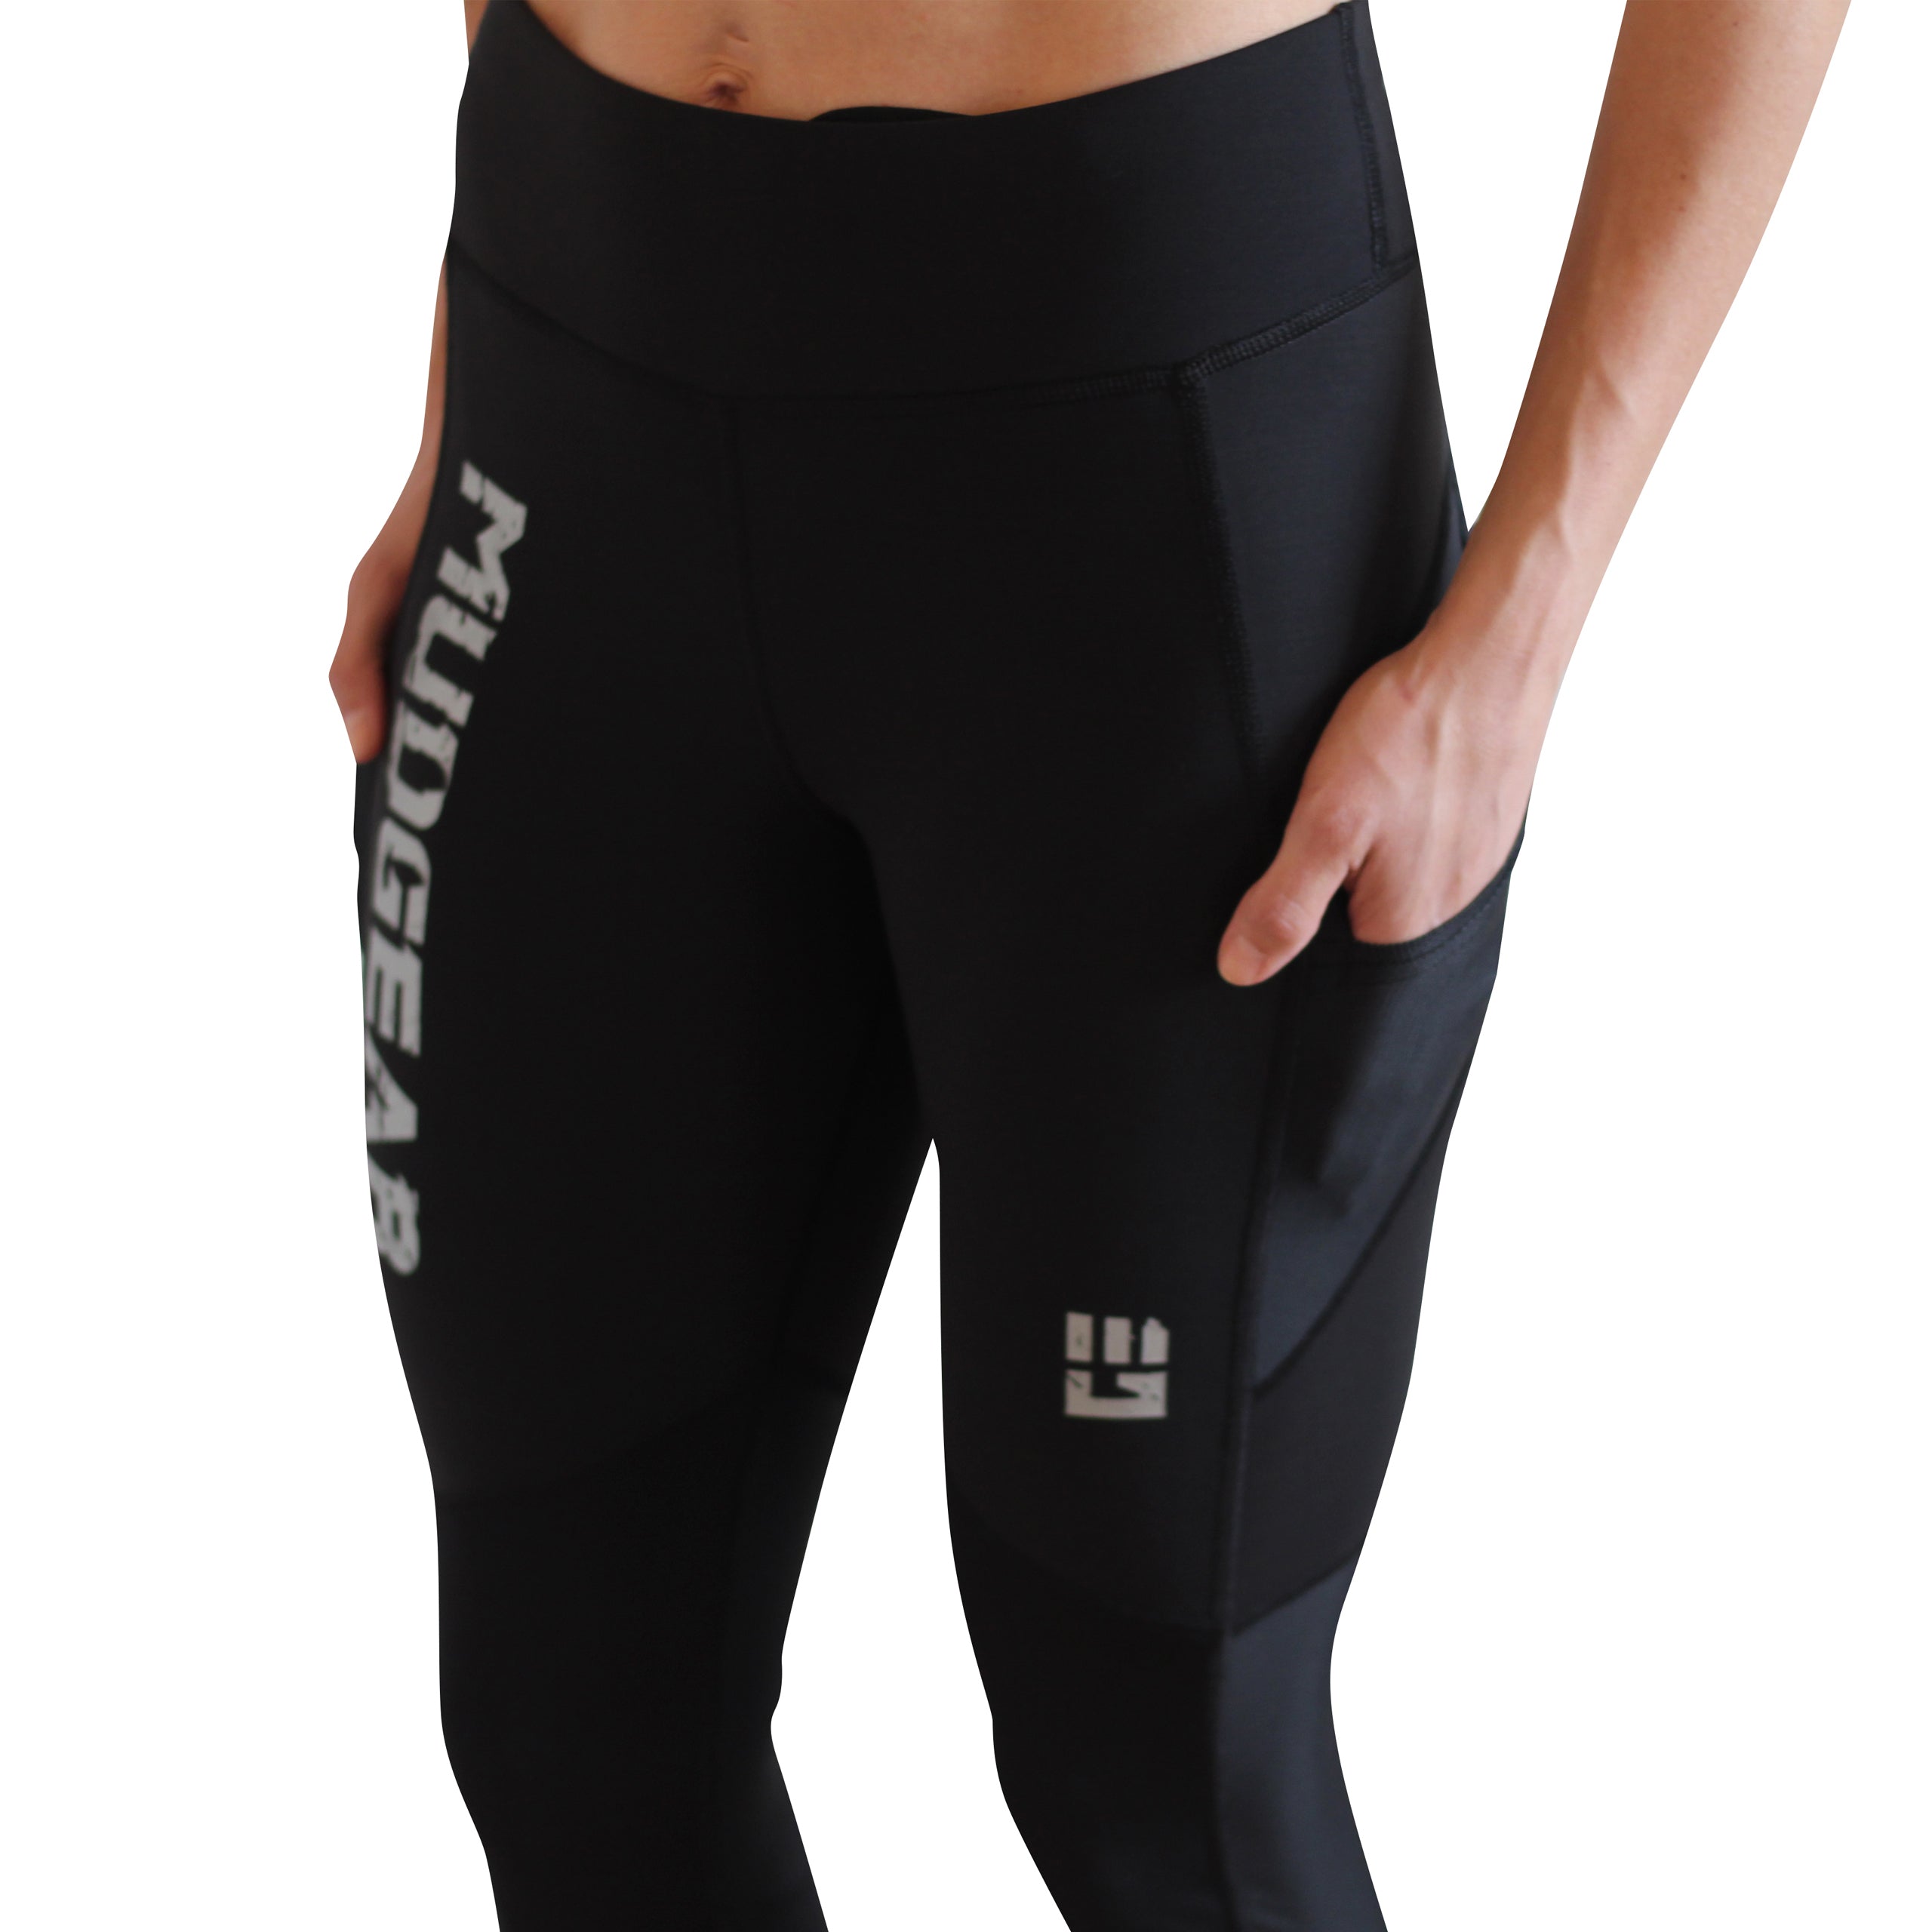 Mudgear - Women's Flex-fit Compression Capri Leggings (Race logo)